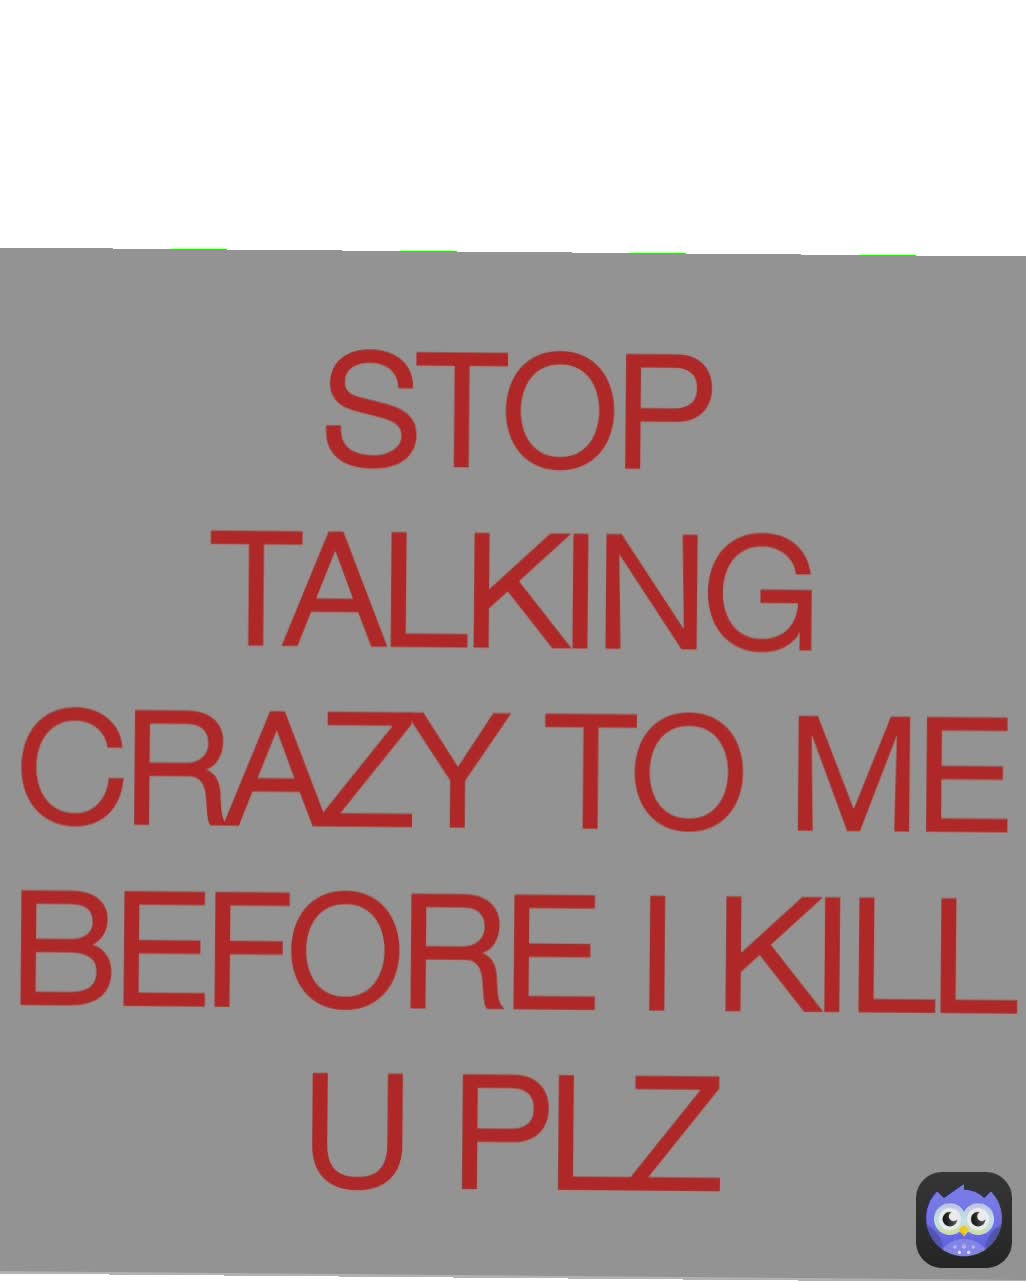 STOP TALKING CRAZY TO ME BEFORE I KILL U PLZ